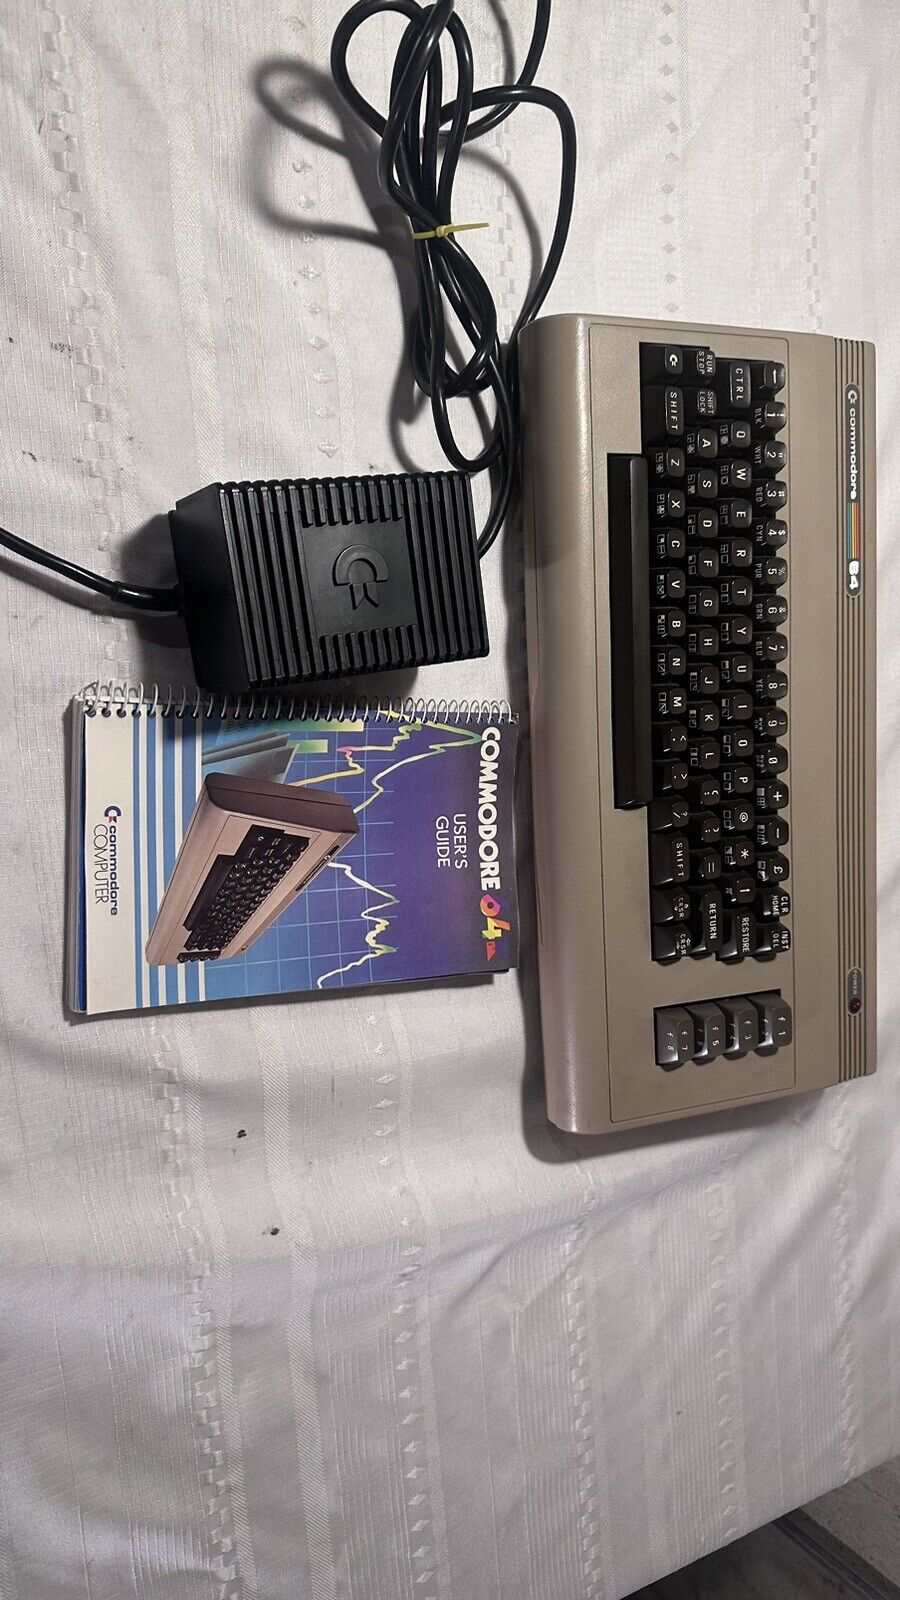 Retro Restored Commodore 64 Computer Tested Vintage 1980s C64 Plus Manual PSU